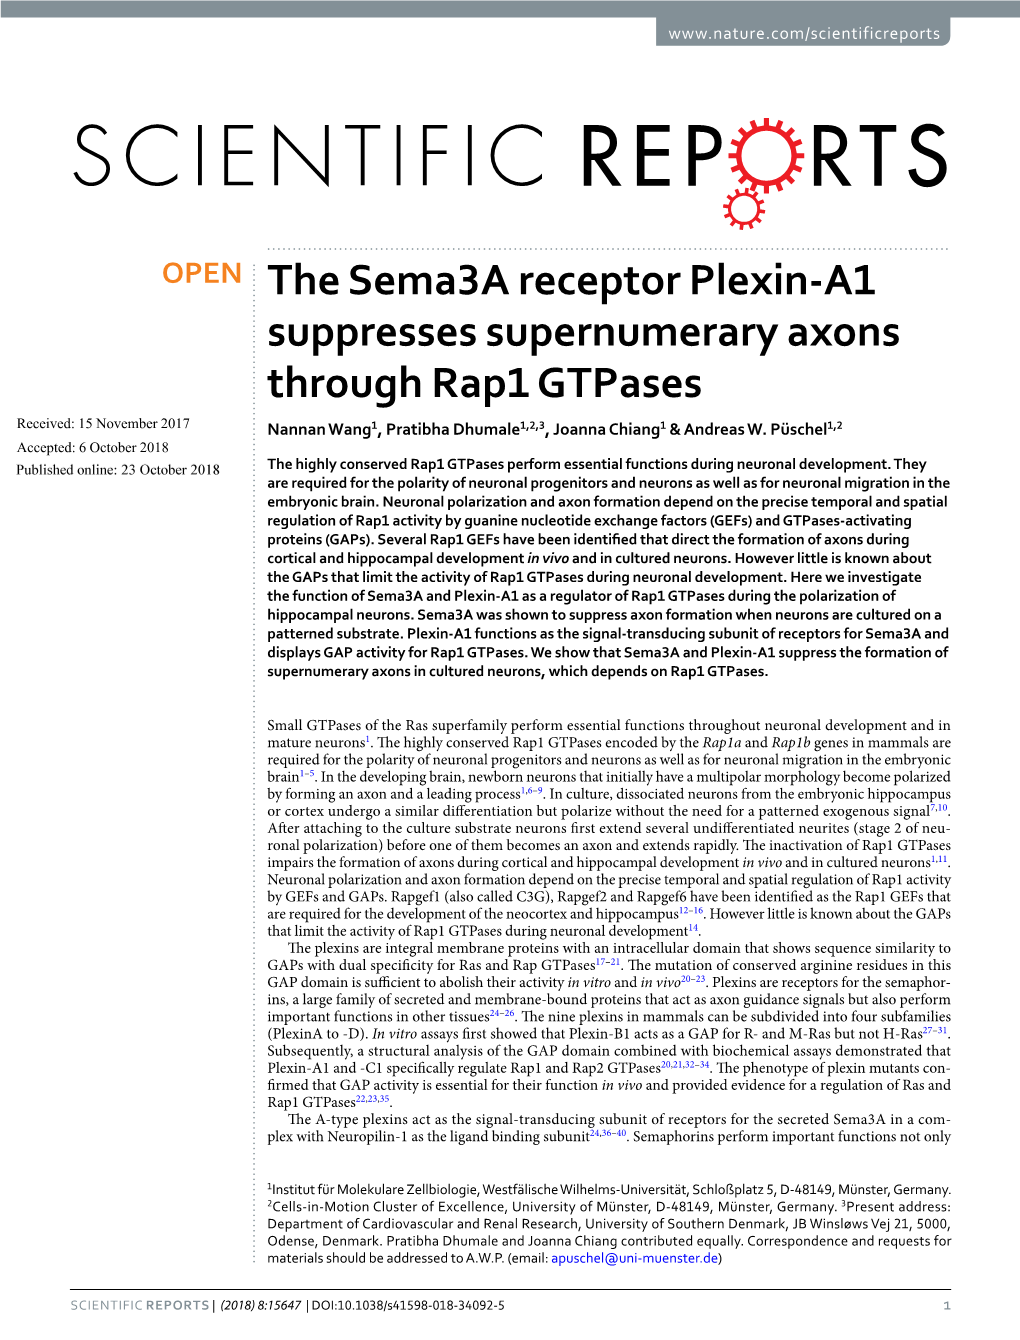 The Sema3a Receptor Plexin-A1 Suppresses Supernumerary Axons Through Rap1 Gtpases